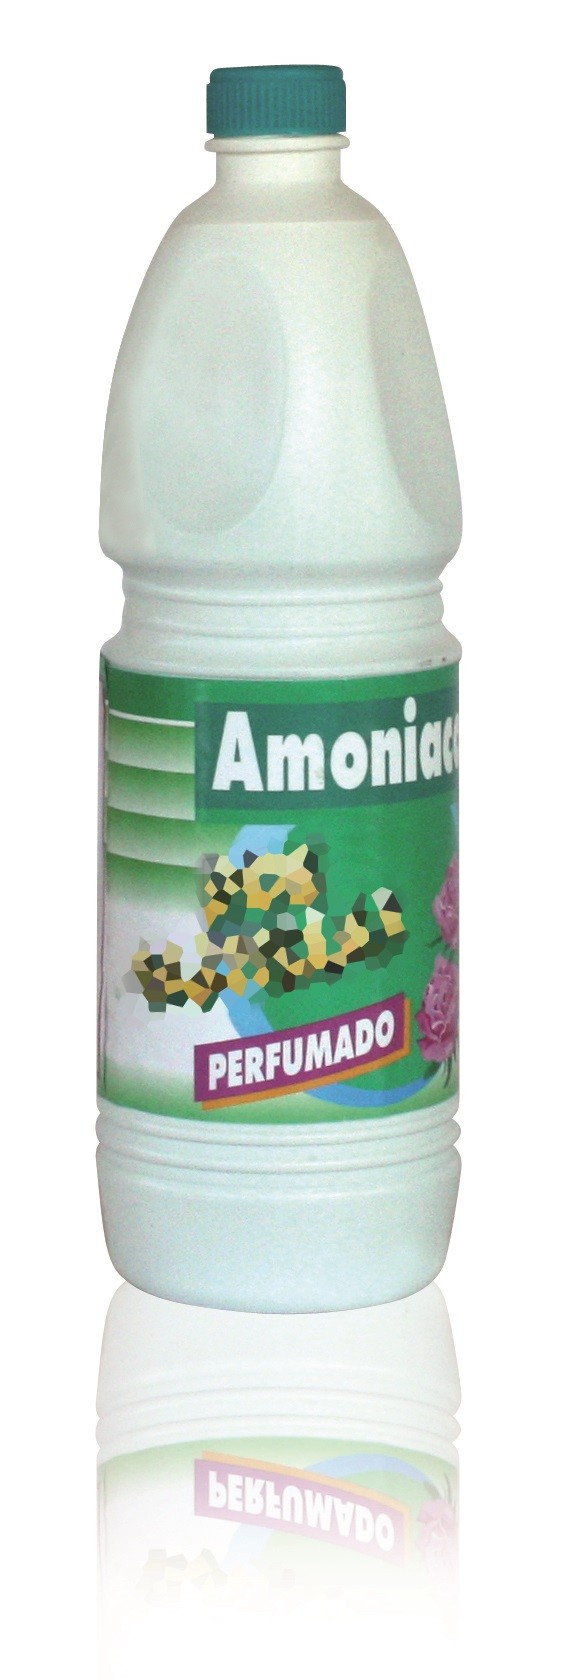 Amoniaco Perfumado 1 L - UV: Caja 15 uds - Palet 45 cajas *